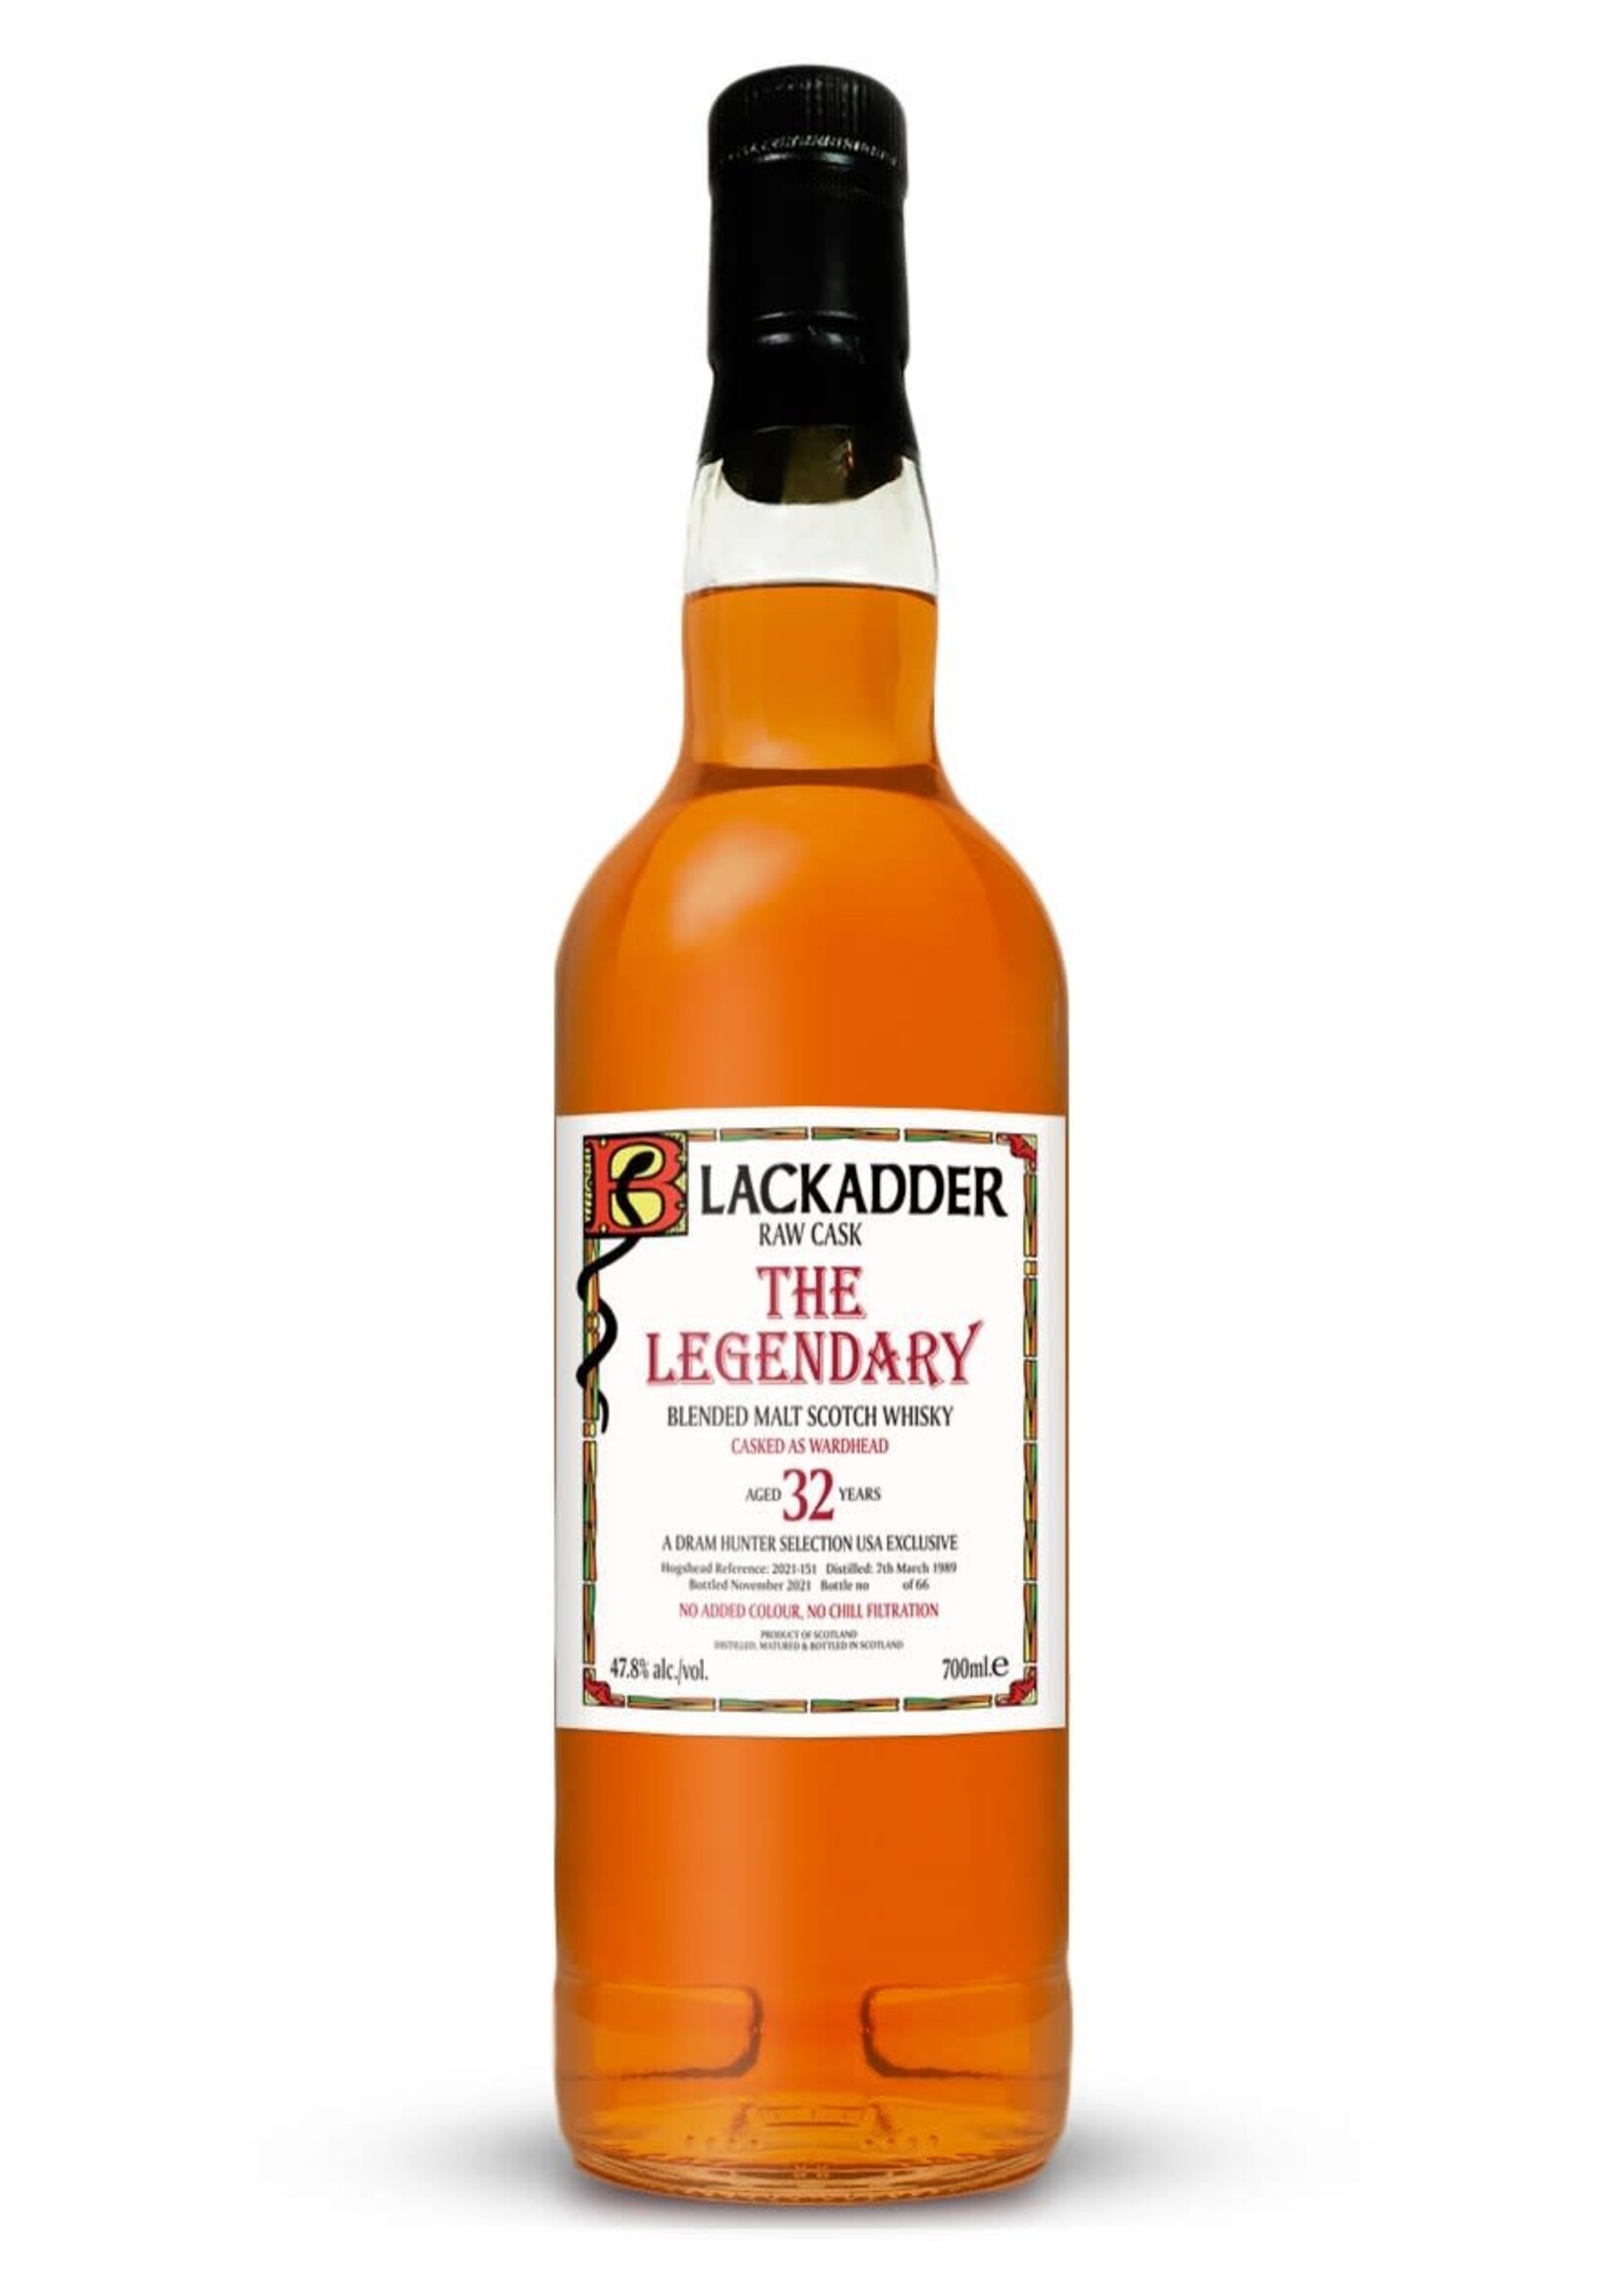 Blackadder Blackadder / The Legendary Raw Cask "Wardhead" (Teaspooned Glenfiddich) 32 Year Single Cask Blended Malt Scotch Whisky 47.8% abv / 700mL